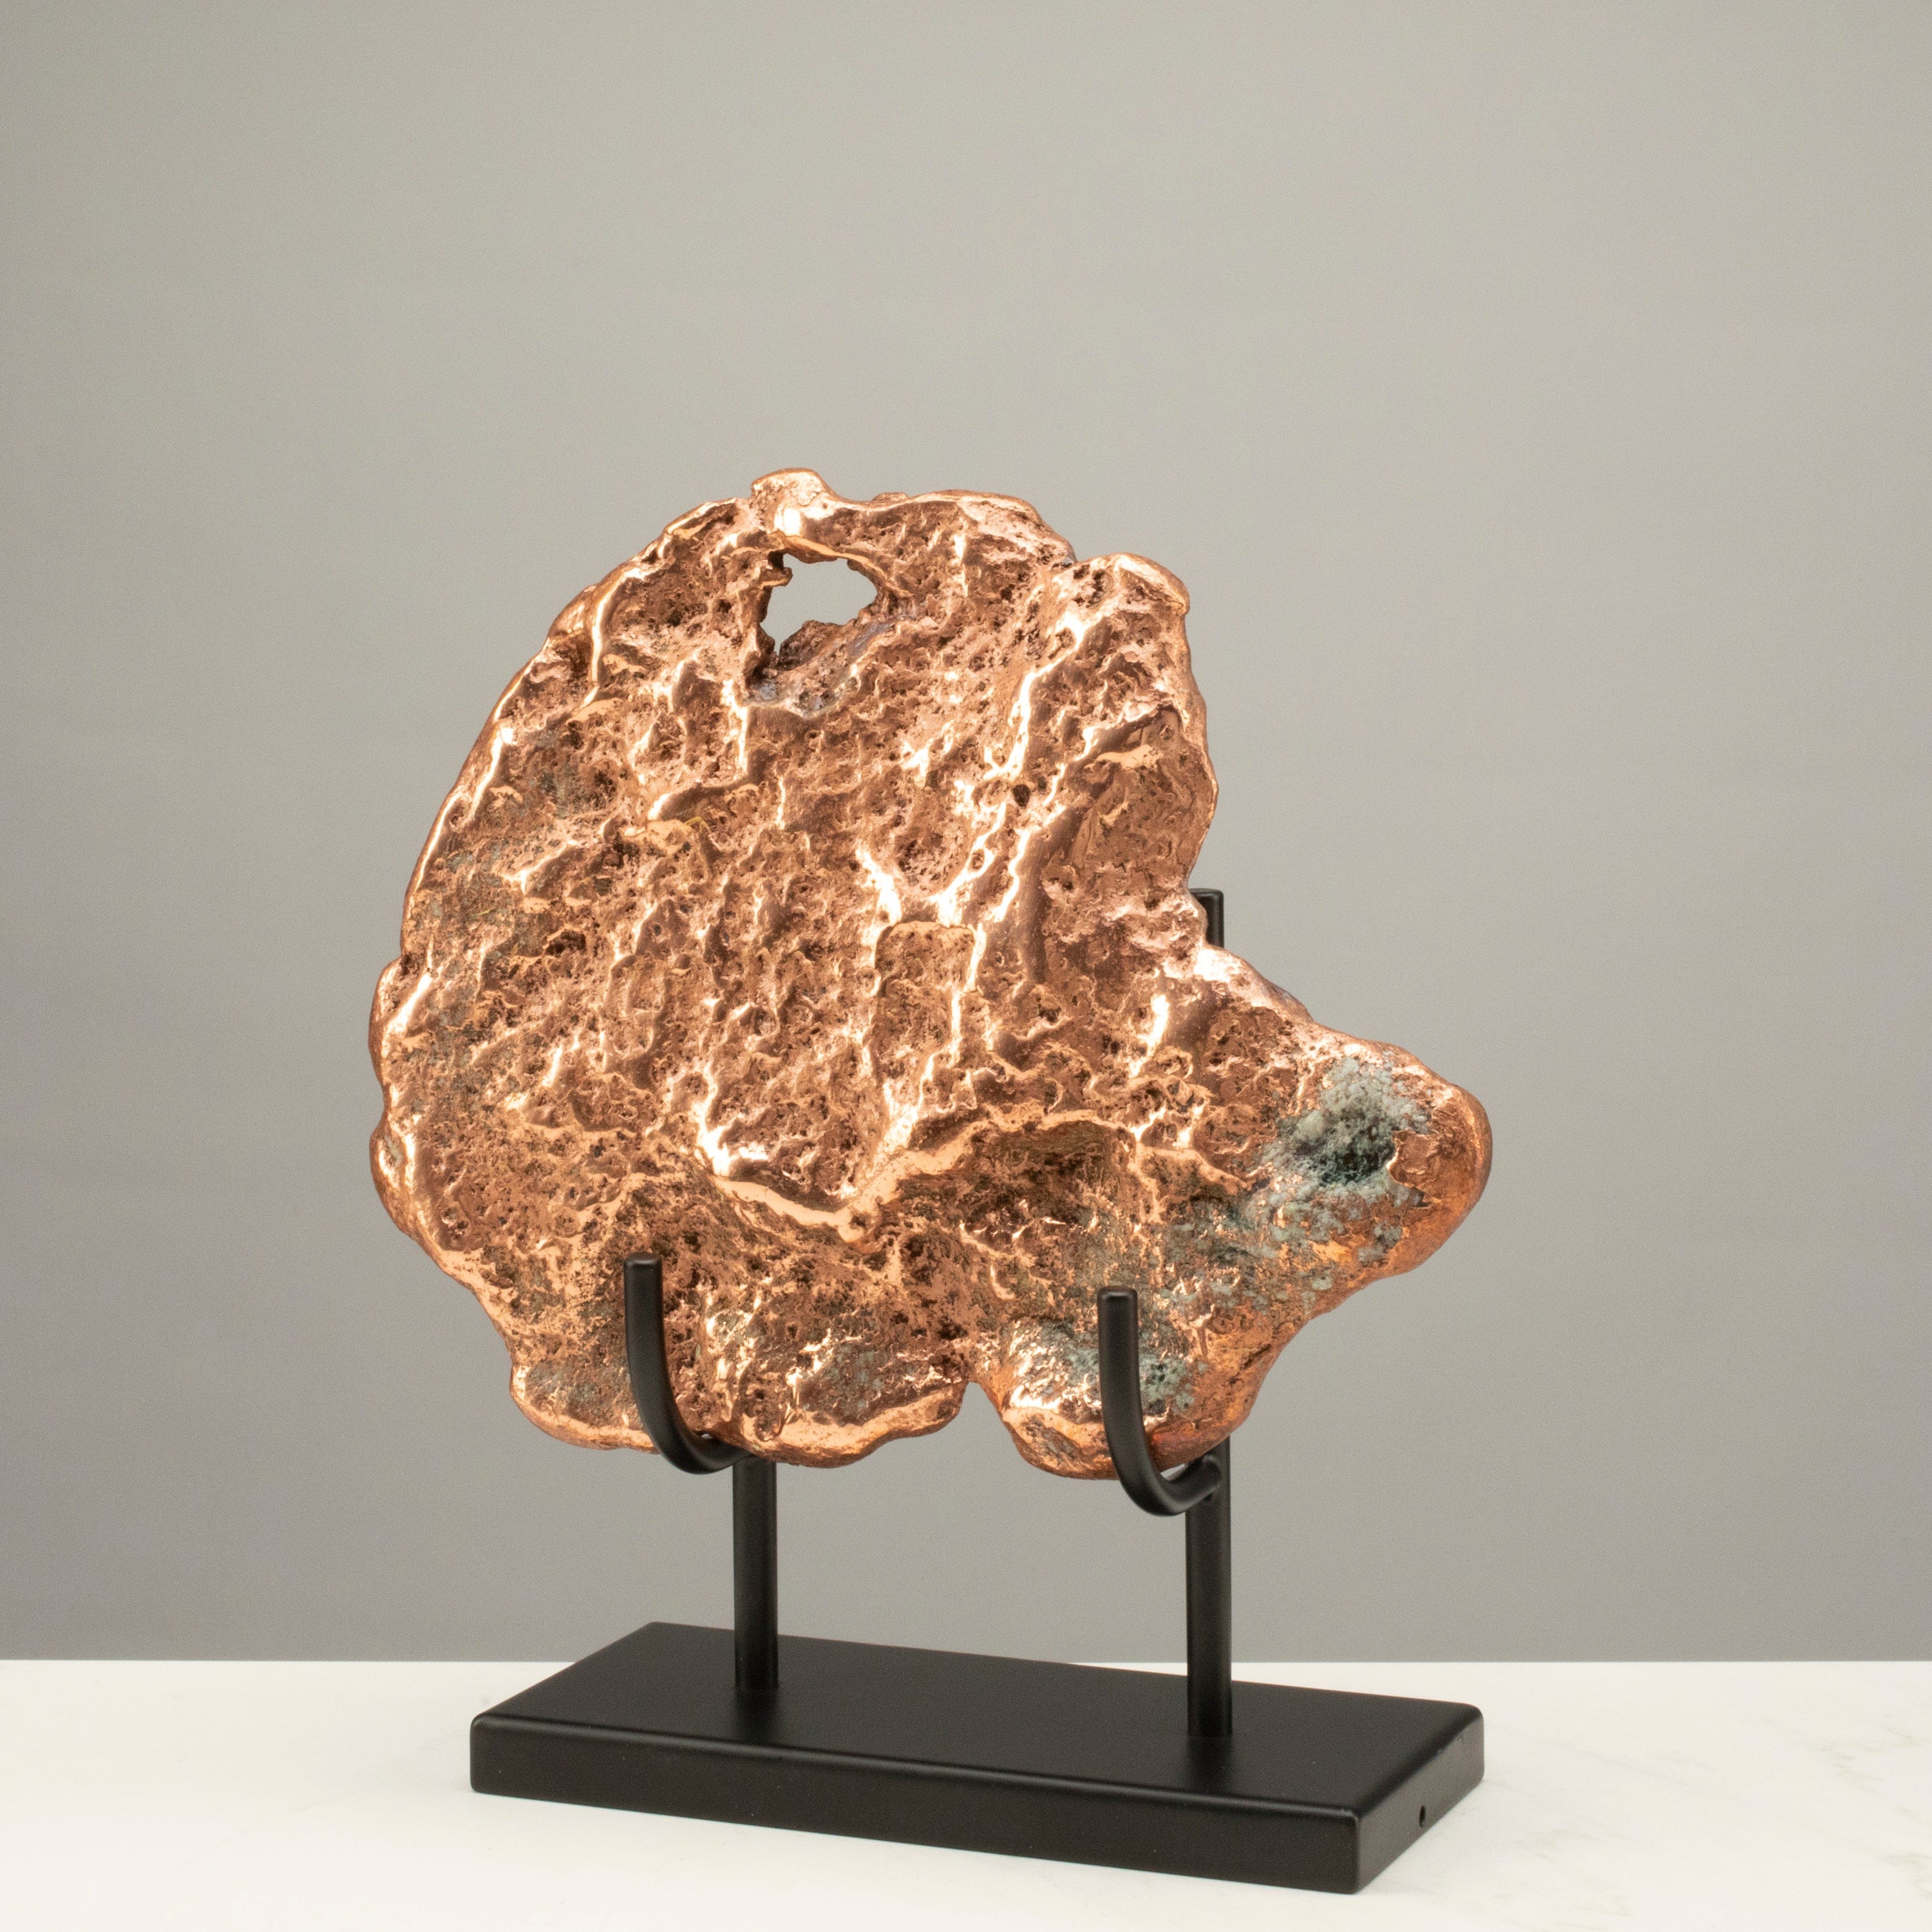 Kalifano Copper Copper from Michigan - 9.5" / 11.3lbs CPR3200.002